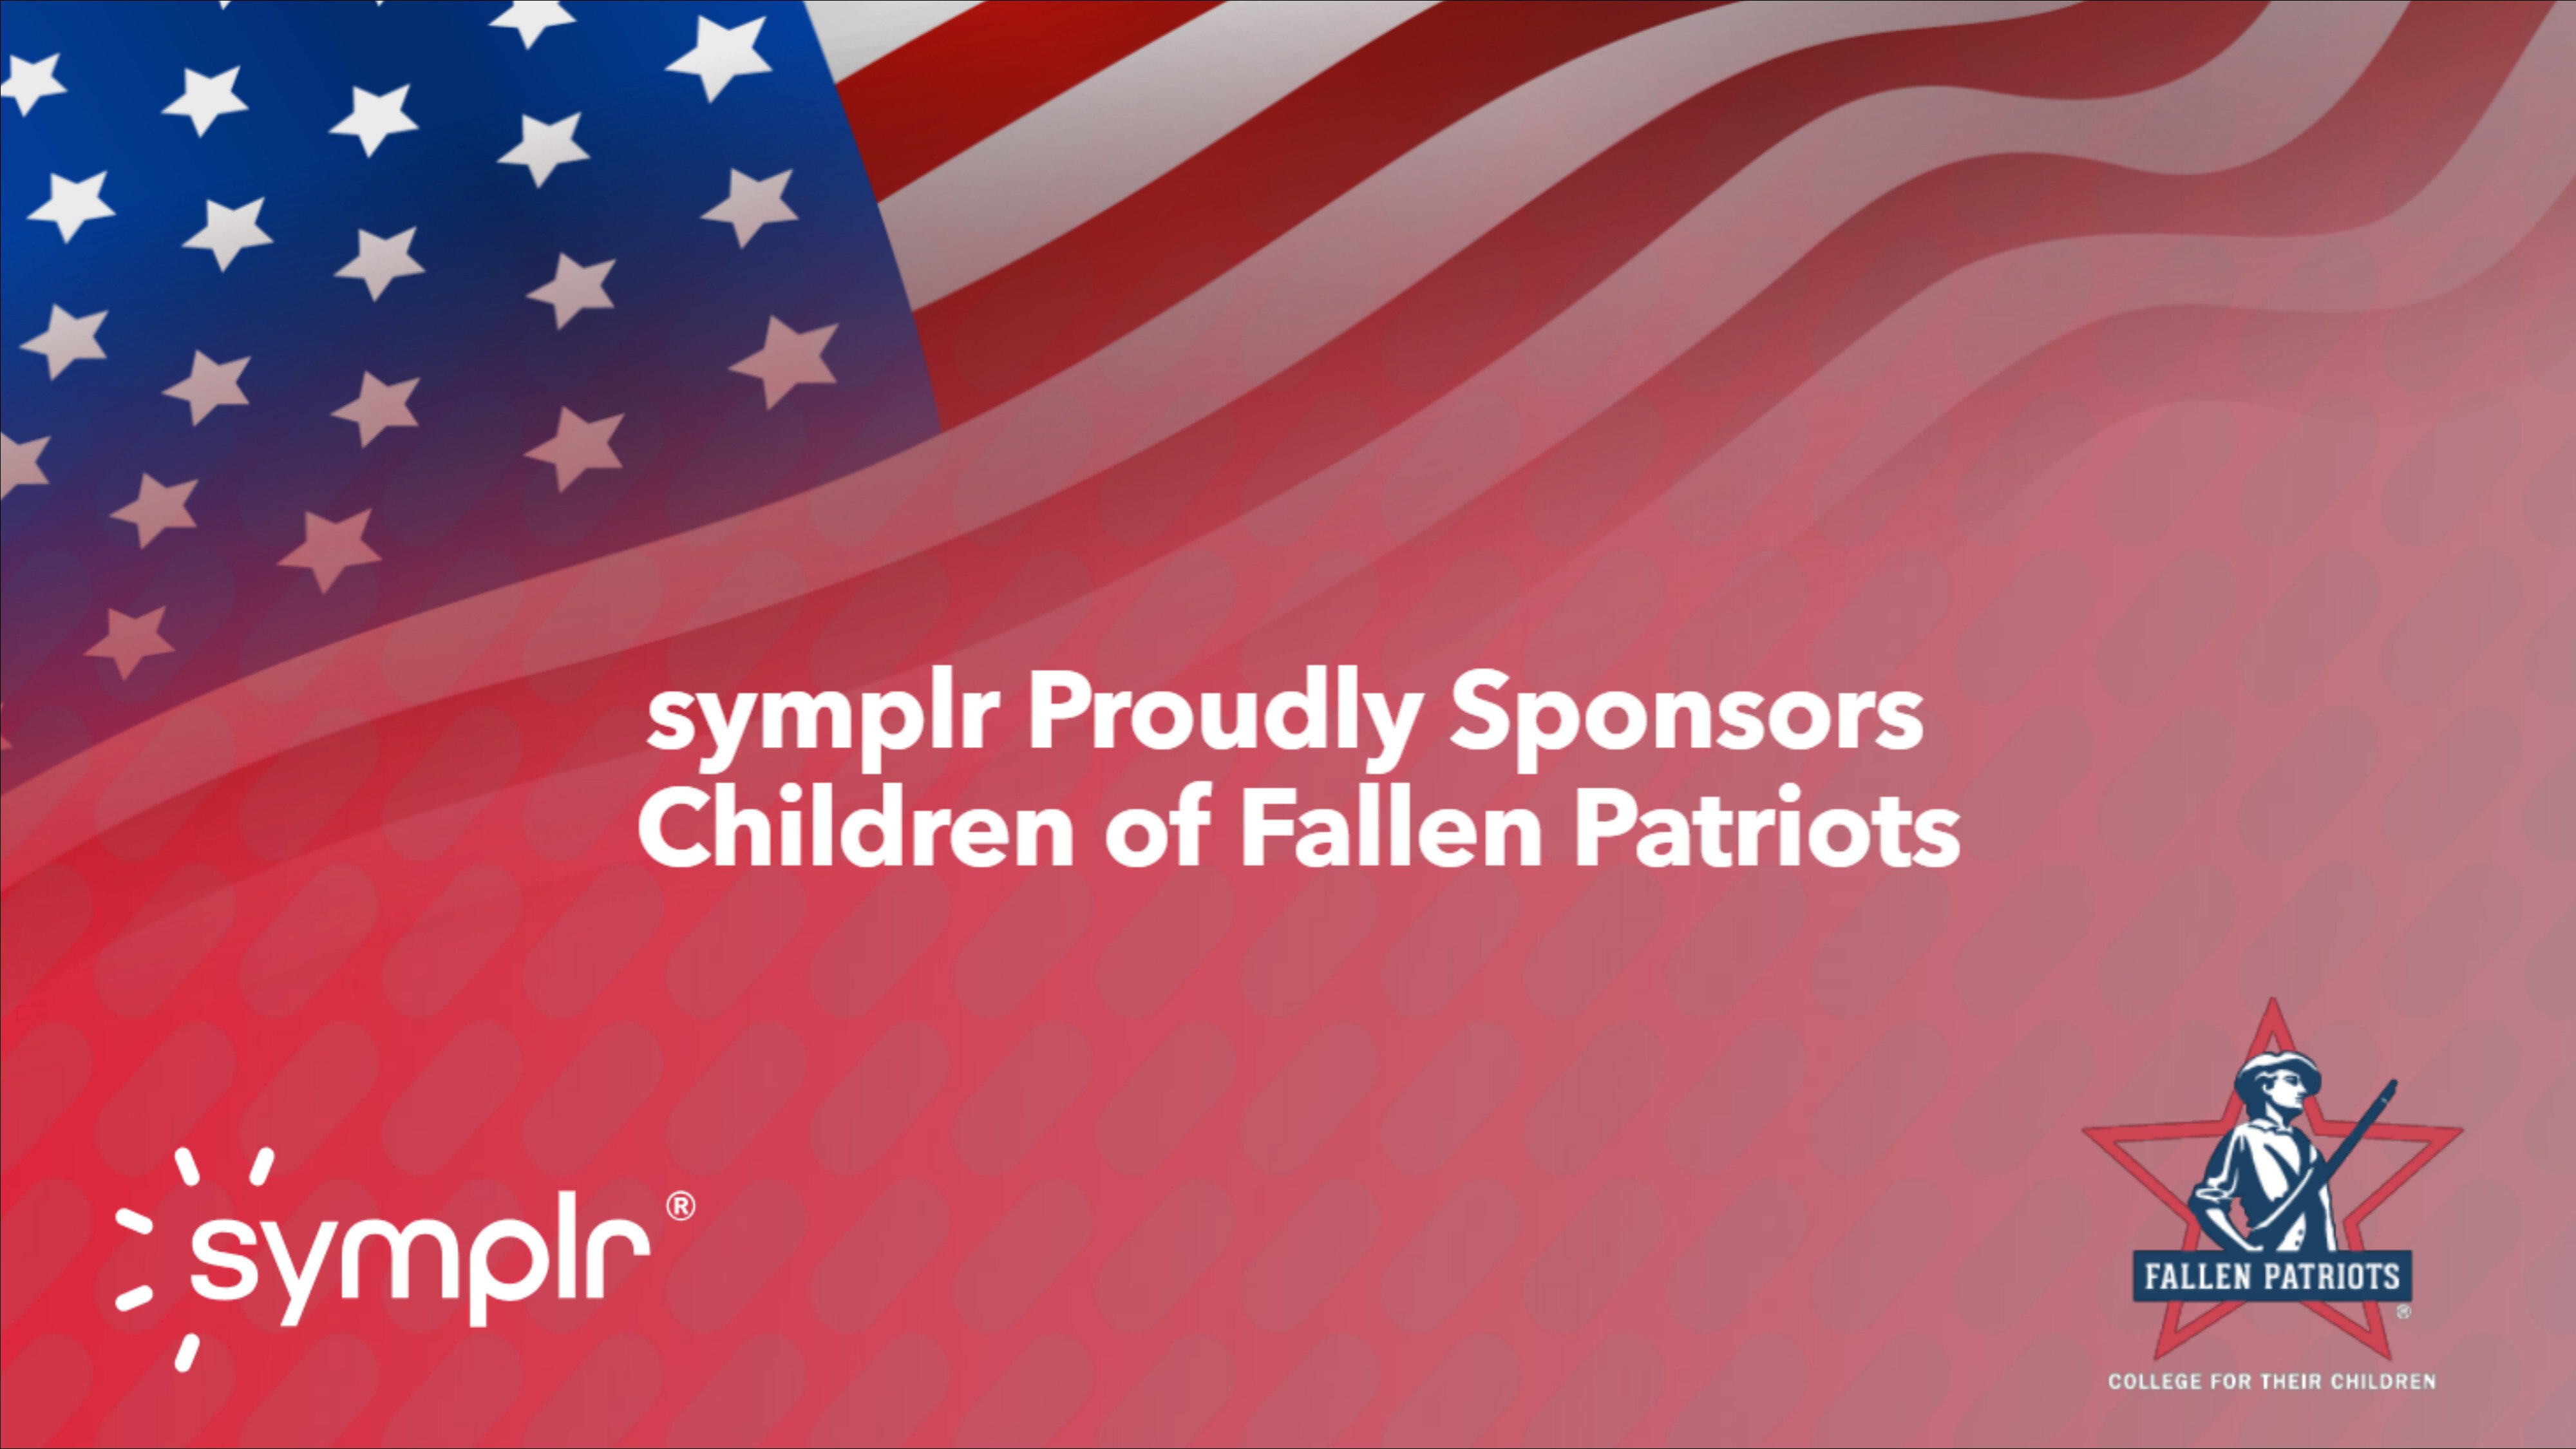 symplr sponsors Children of Fallen Patriots